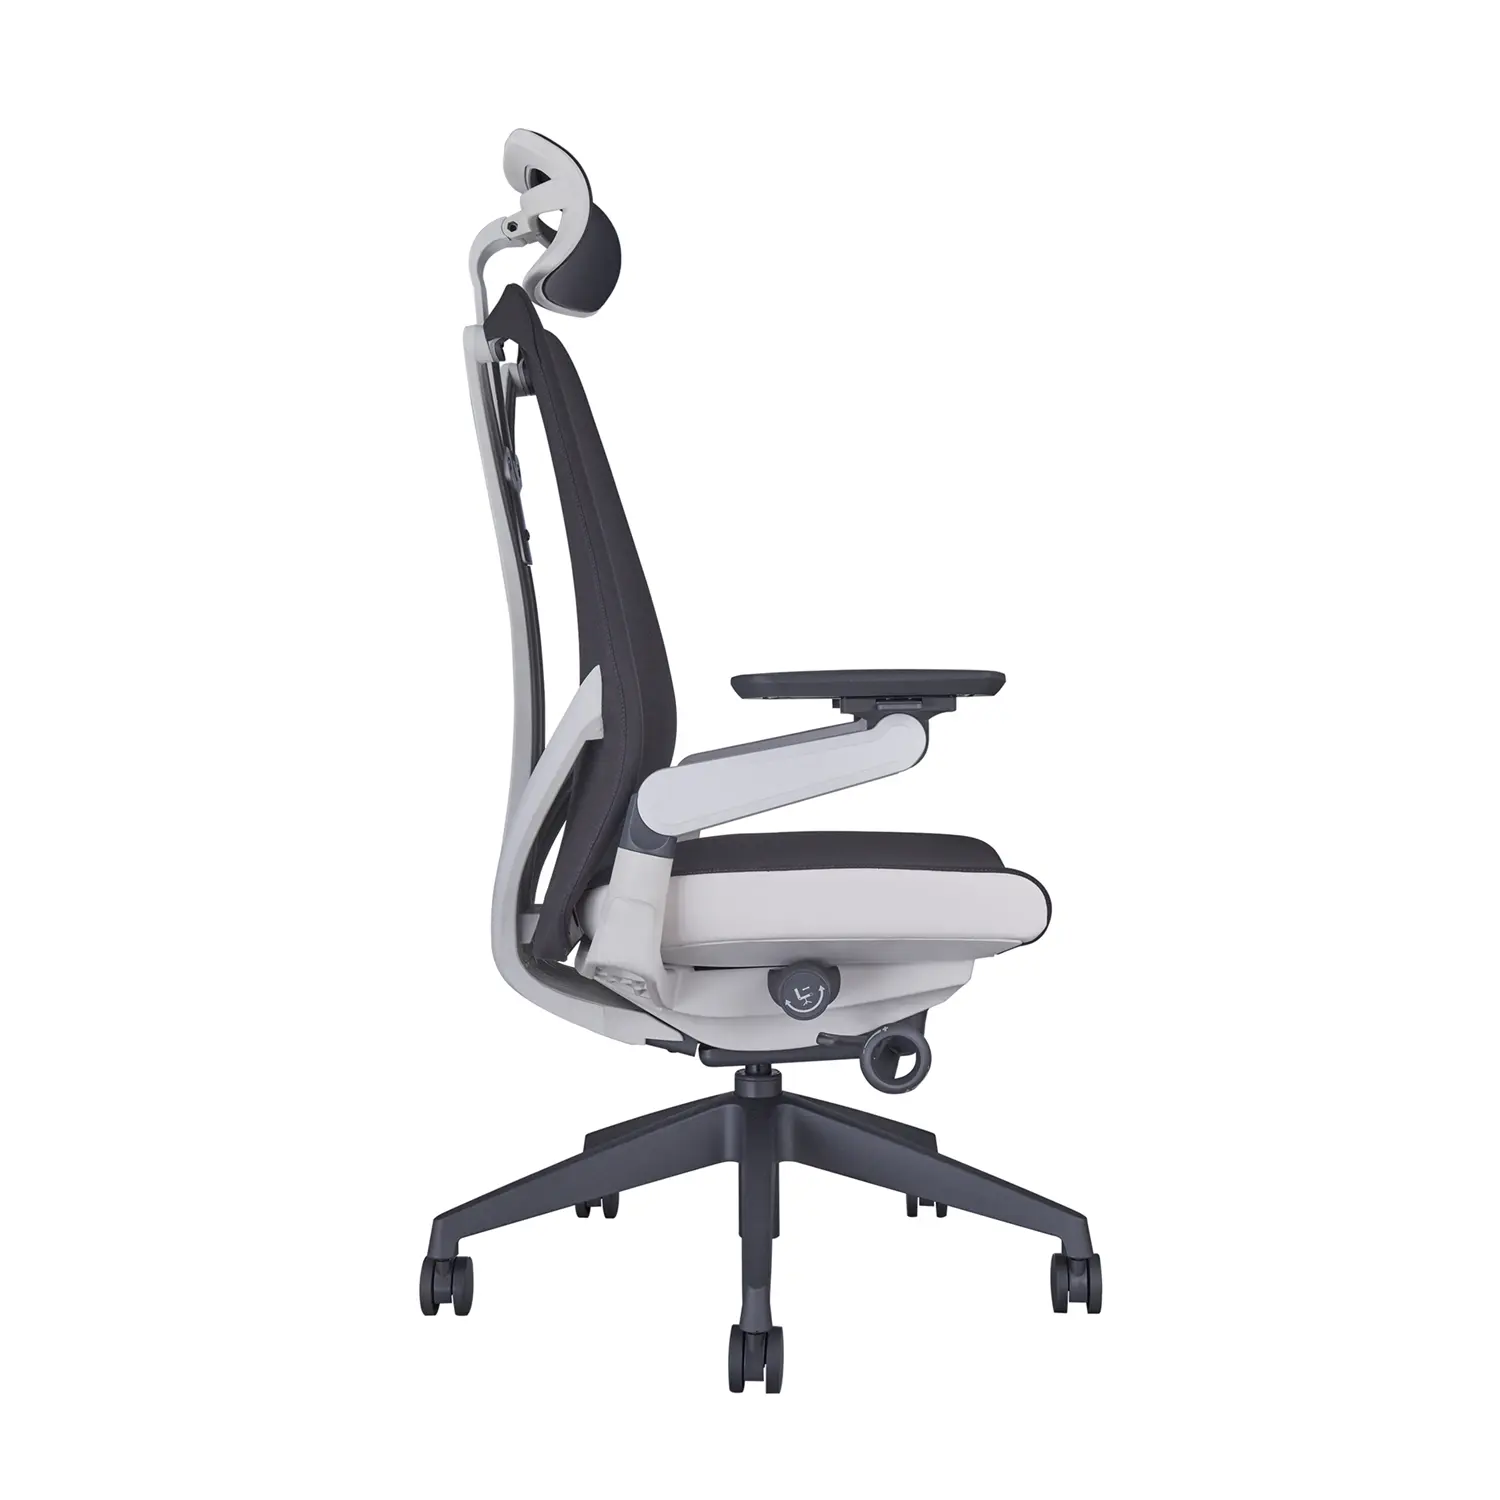 Foshan कार्यालय फर्नीचर उच्च-वापस ergonomic असबाबवाला डेस्क कुर्सी 360 डिग्री रोटरी समायोज्य armrest के साथ लचीला कुर्सी